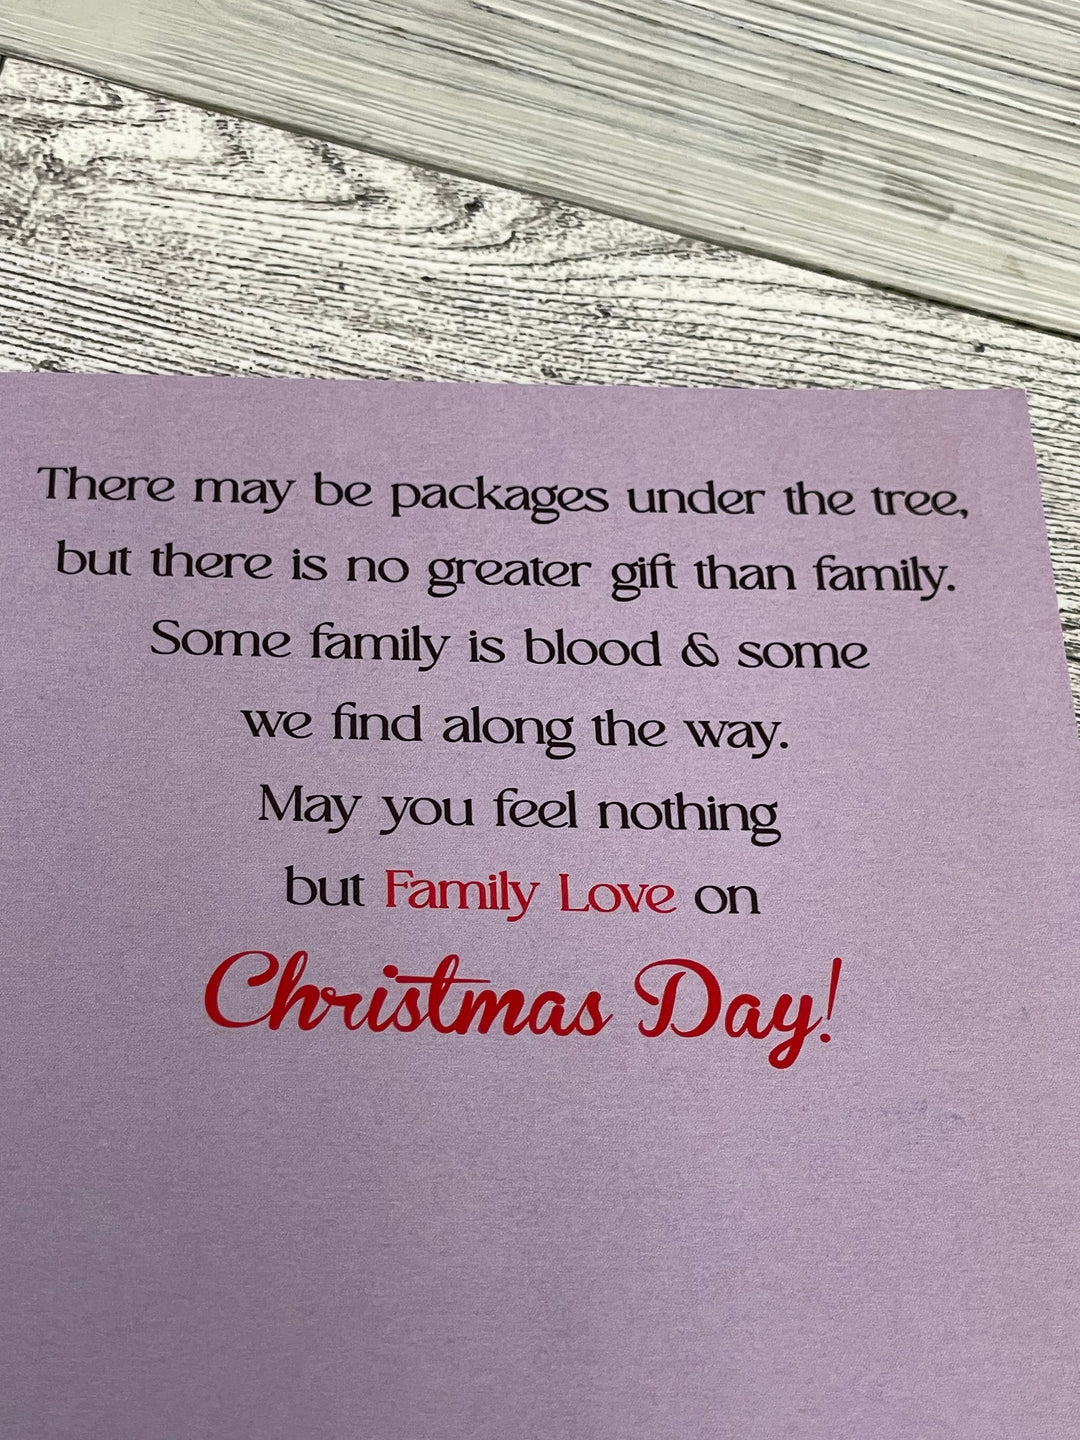 Family Brings Joy by Pamela Hills: African American Christmas Card Box Set (Inside)